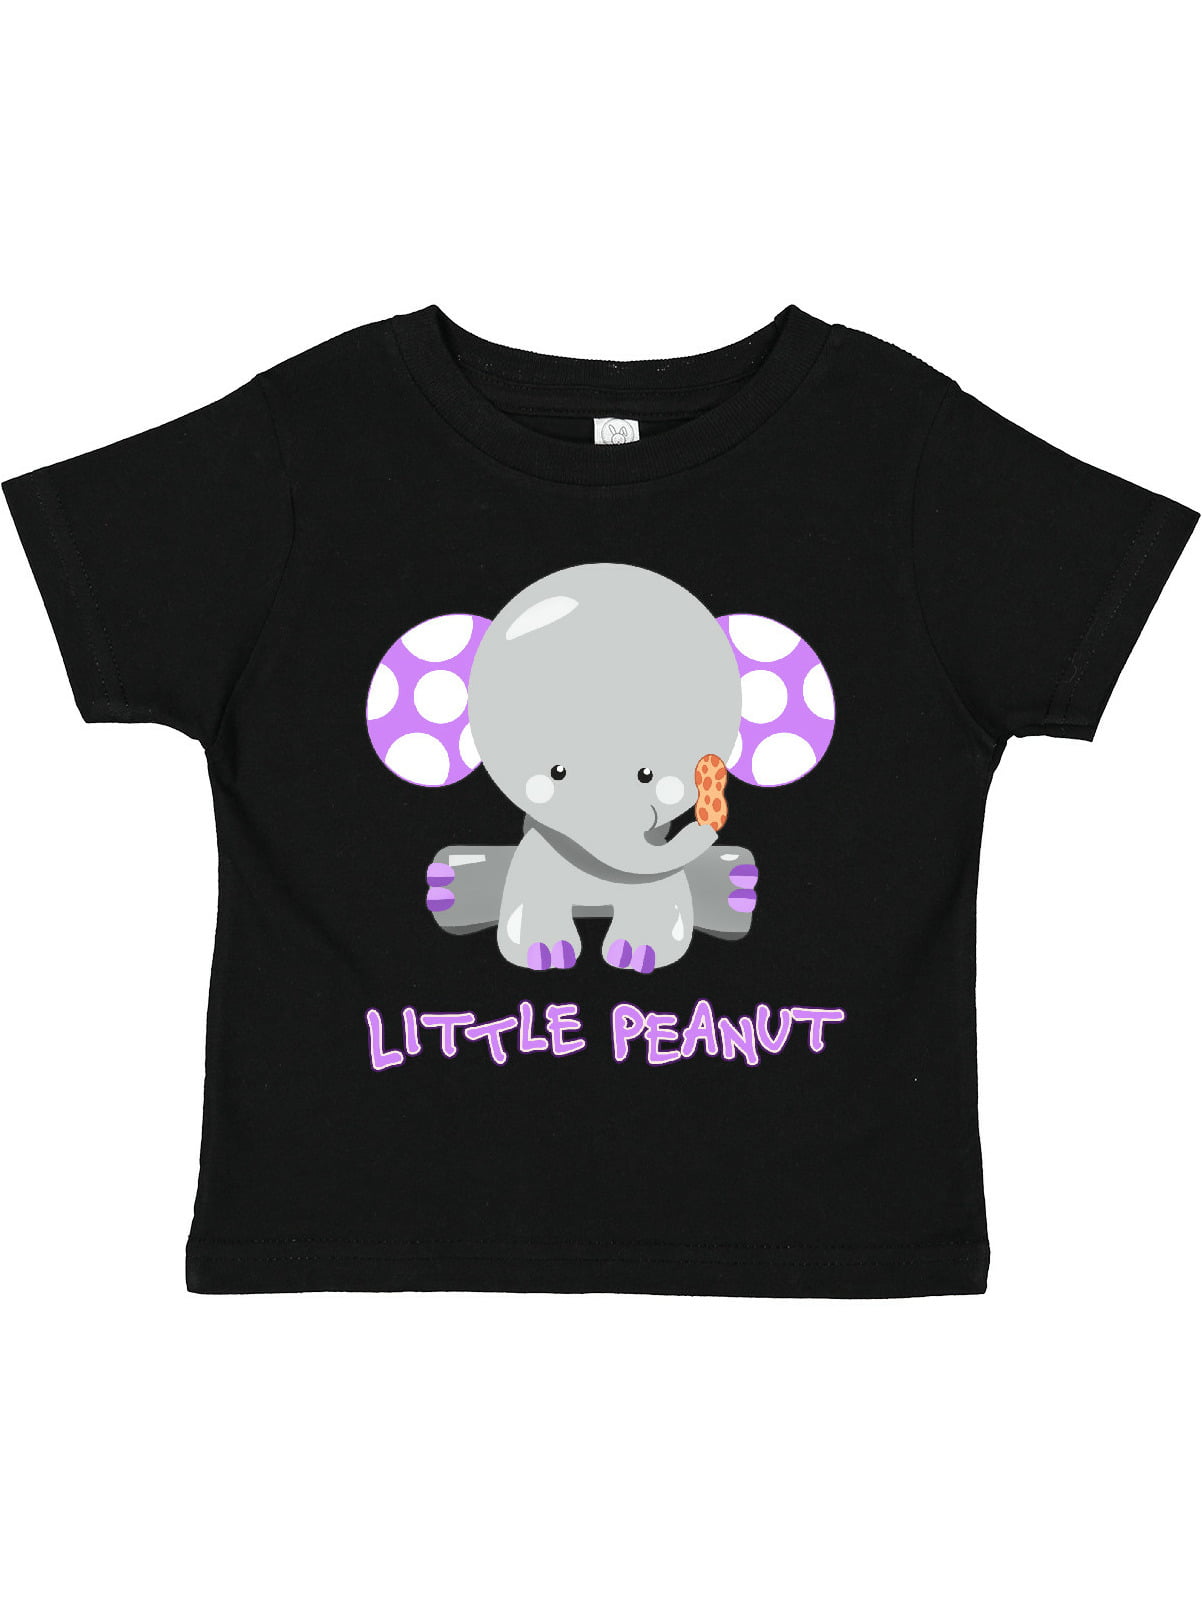 Little Peanut Elephant Unisex Toddler T-Shirt 